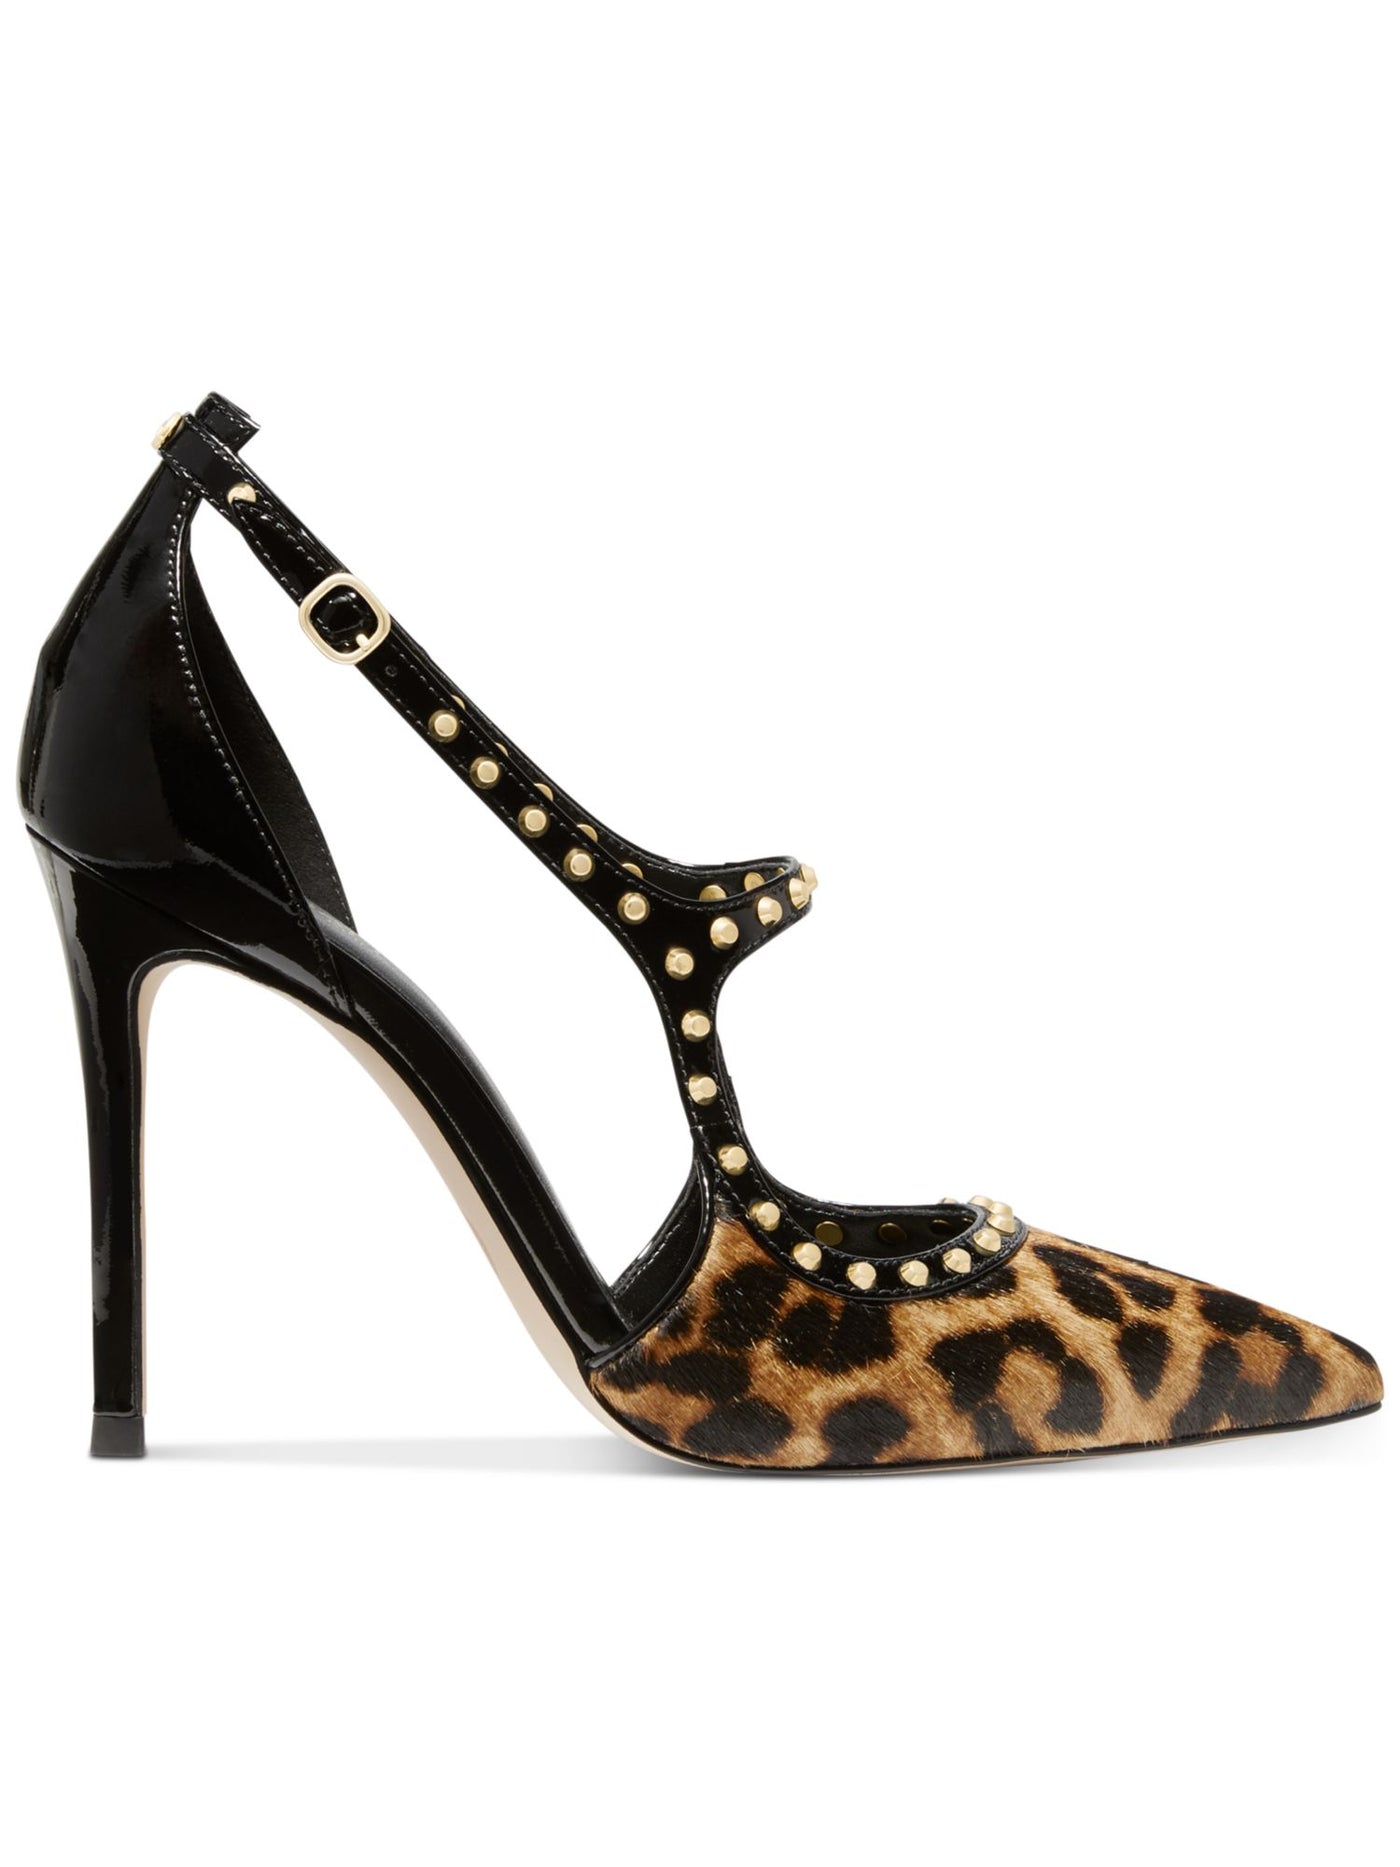 MICHAEL KORS Womens Black Leopard Print Studded Logo Ava Pointed Toe Stiletto Buckle Leather Dress Pumps Shoes 8.5 M